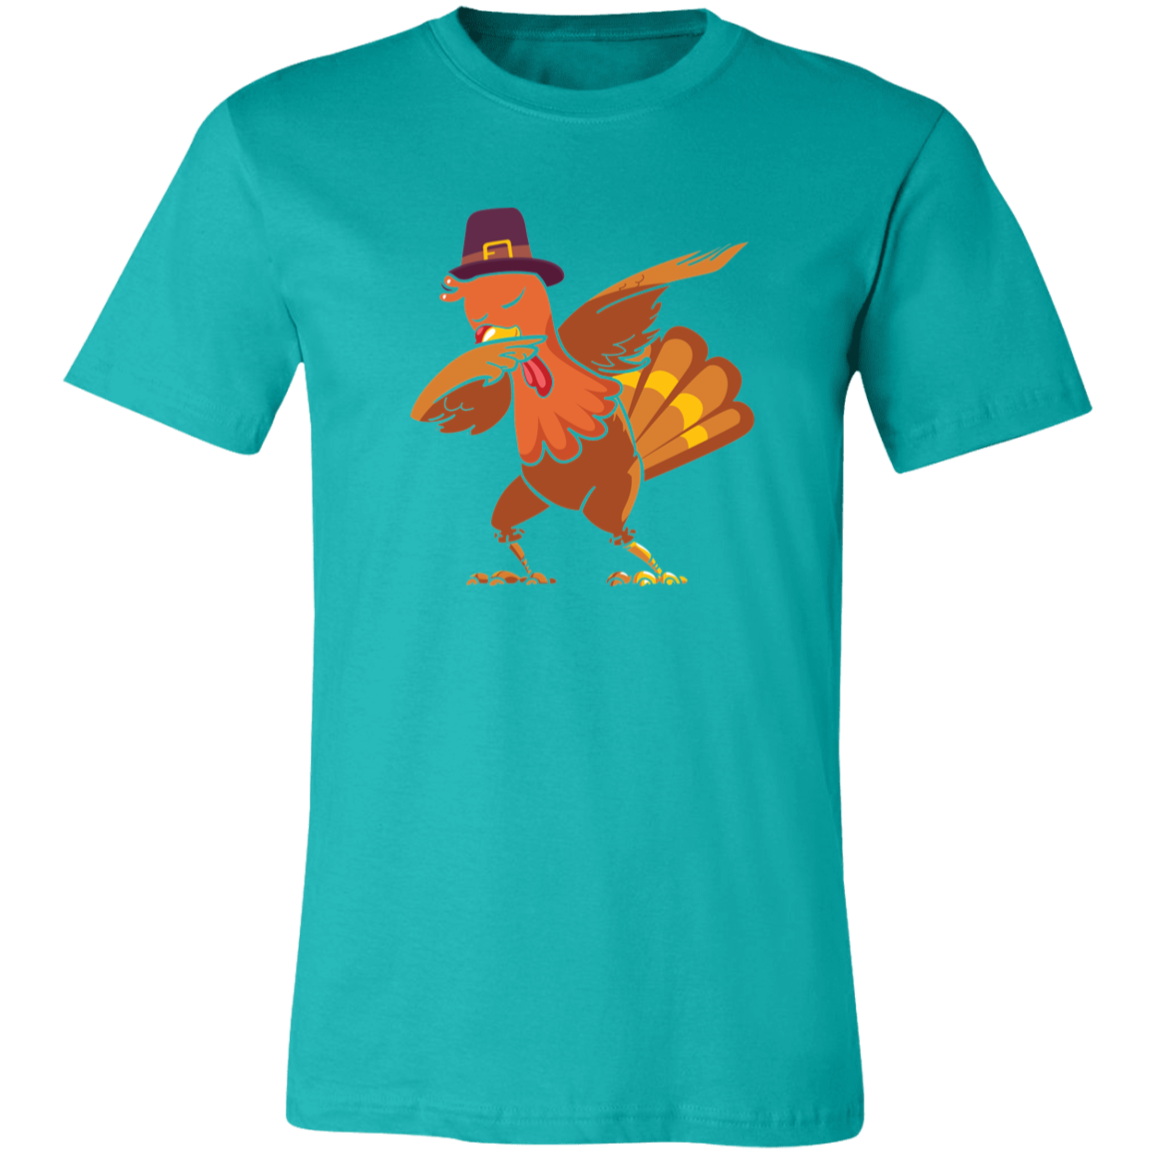 Cool Turkey Shirt